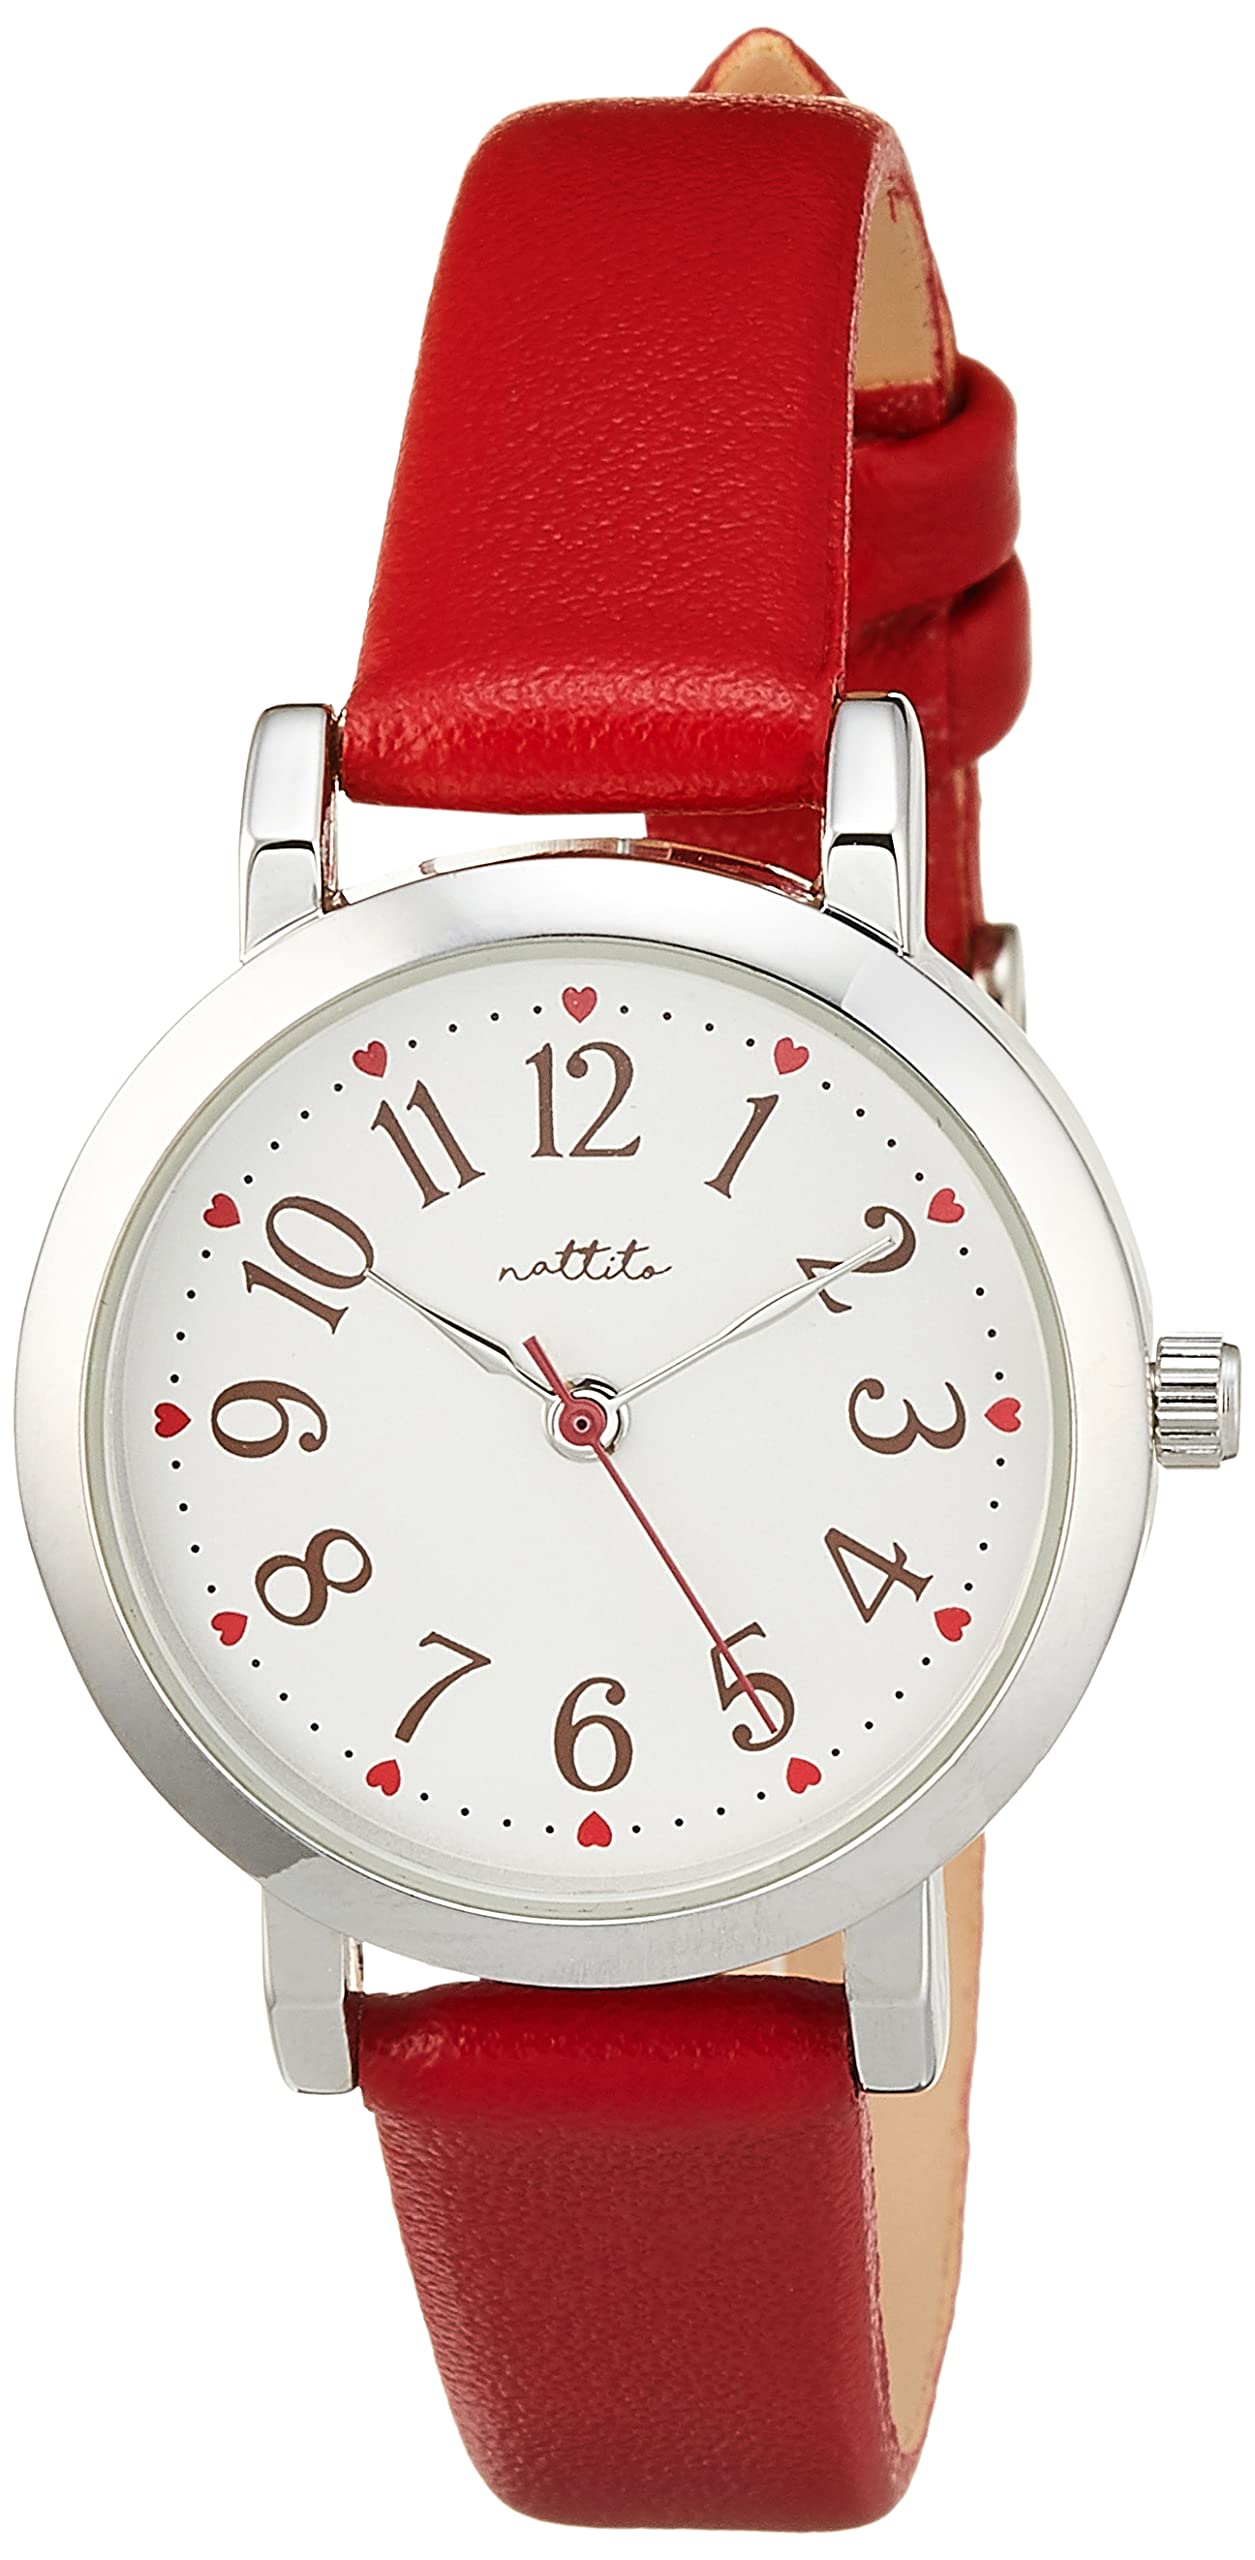 Fieldwork GY044-4 Women's Analog Wrist Watch, Silver, Leather Strap, Red, red